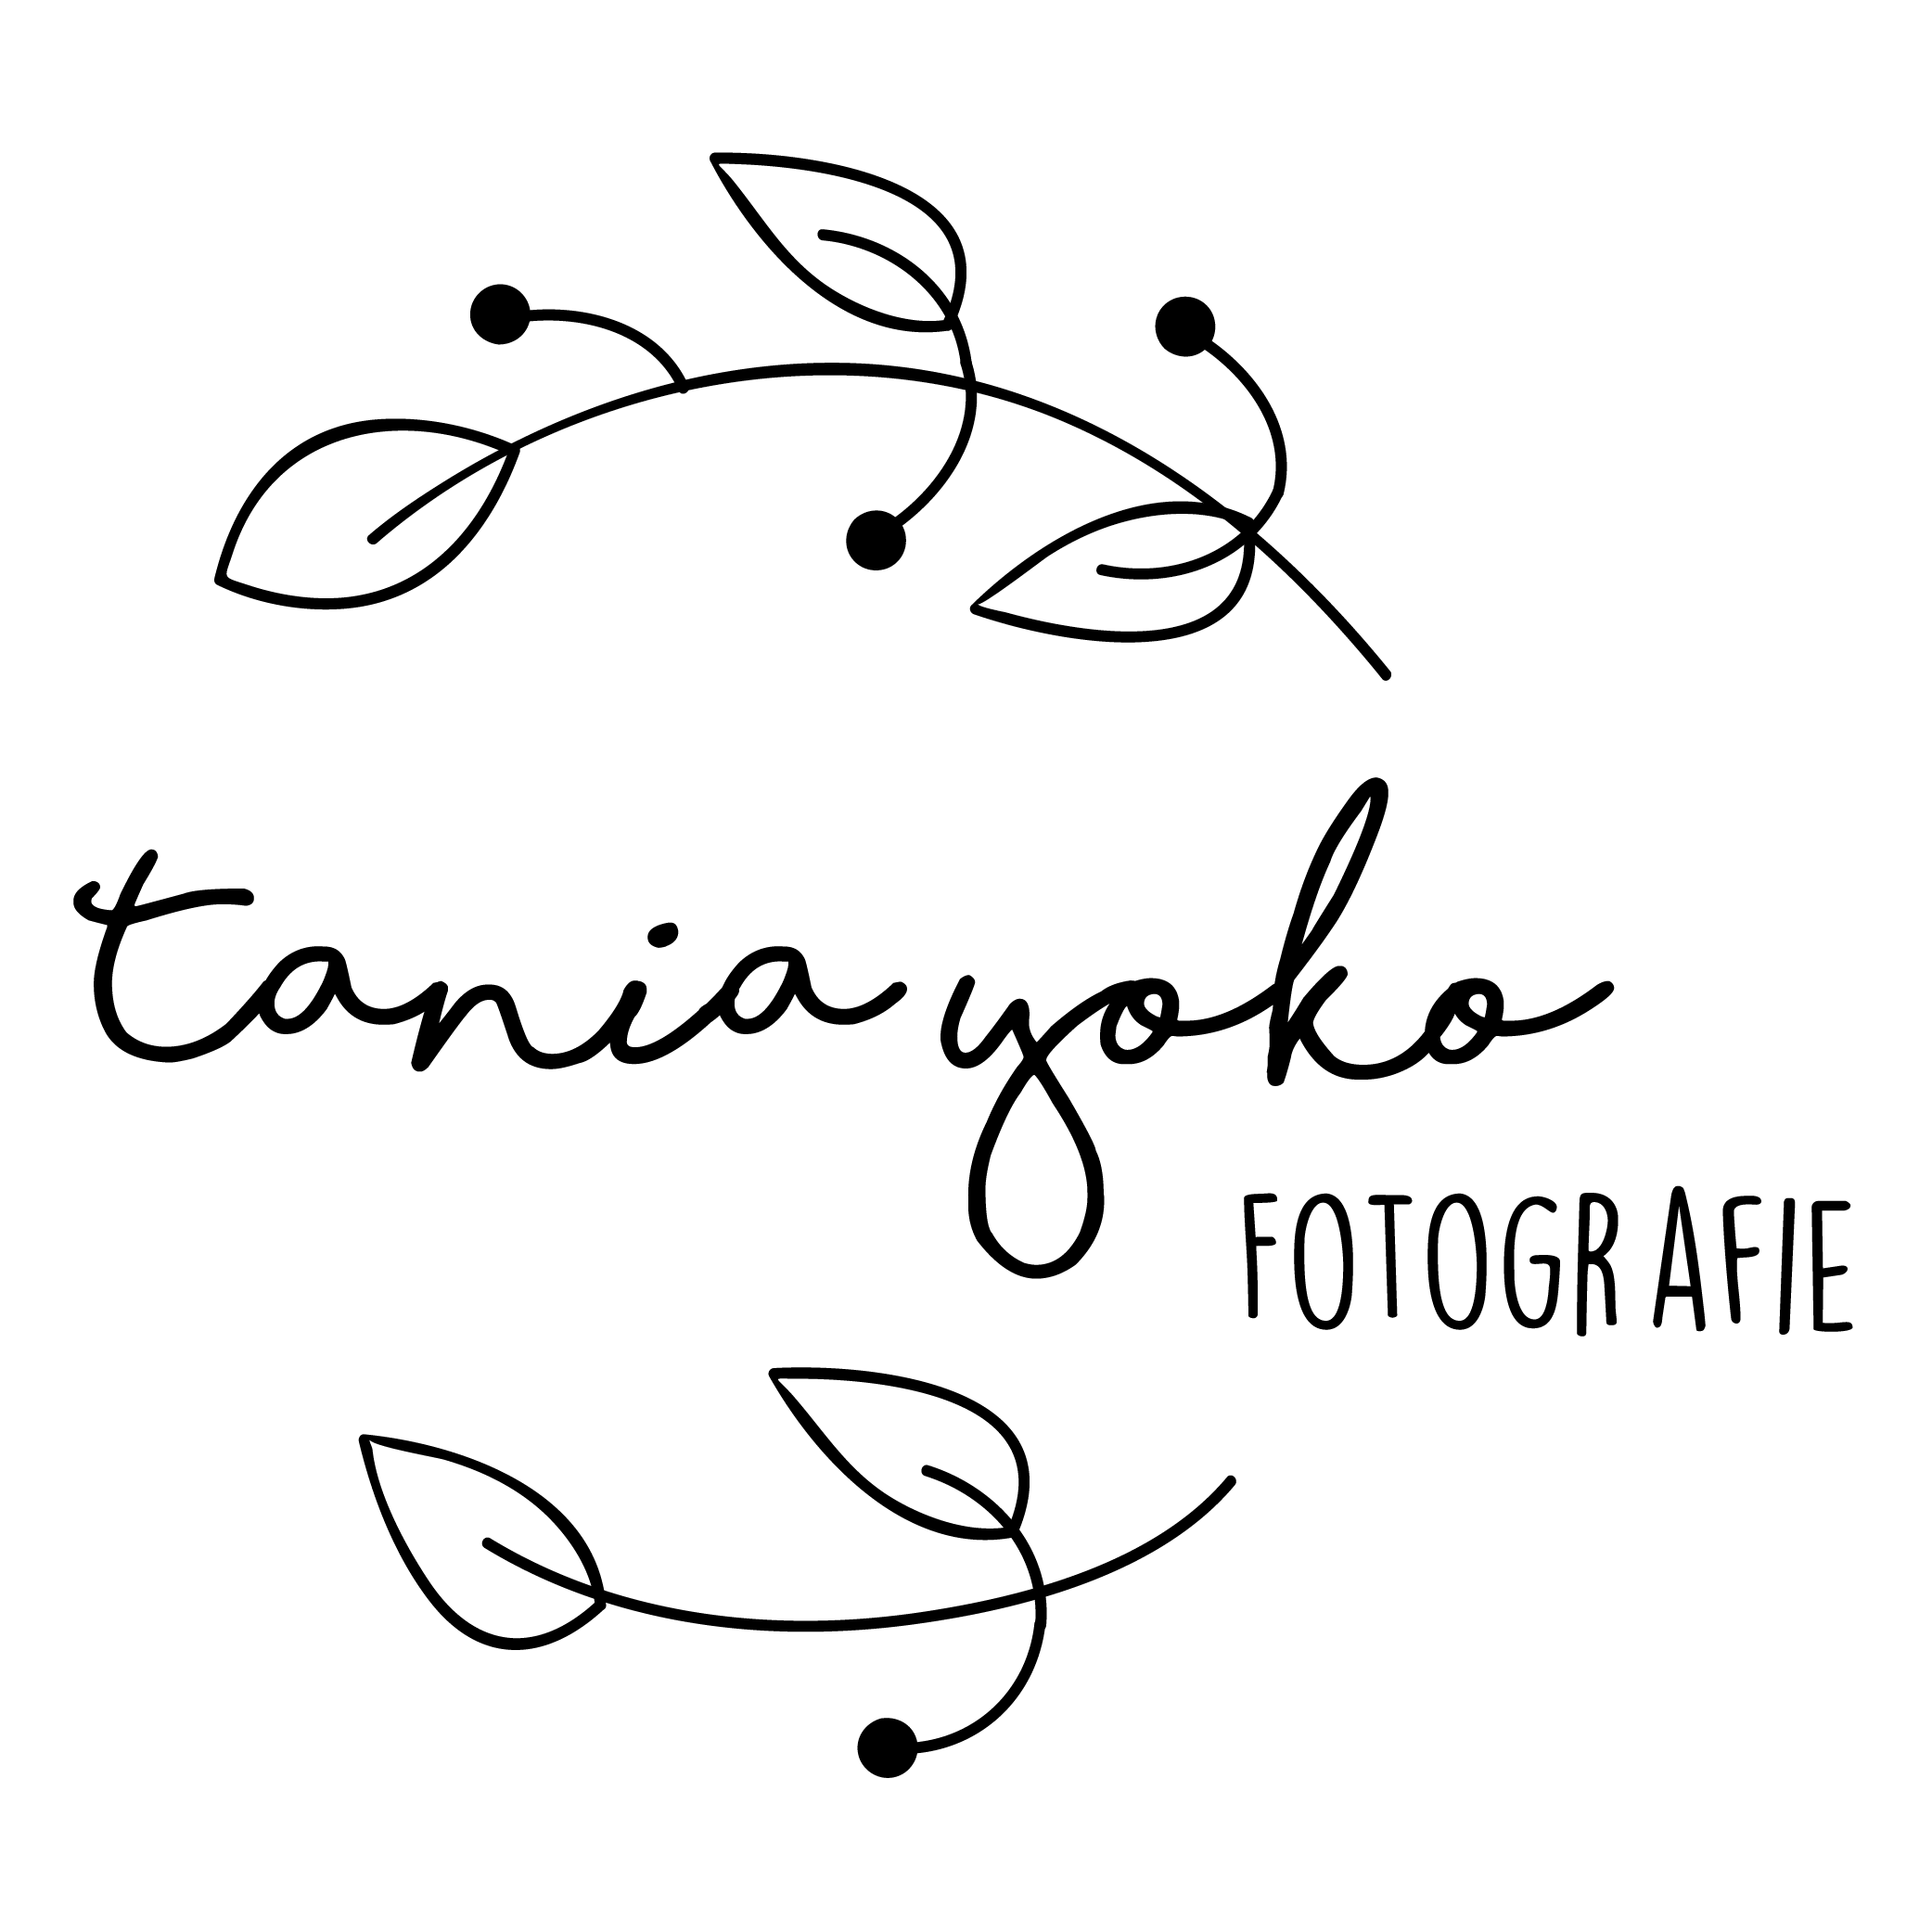 Tania Yoko